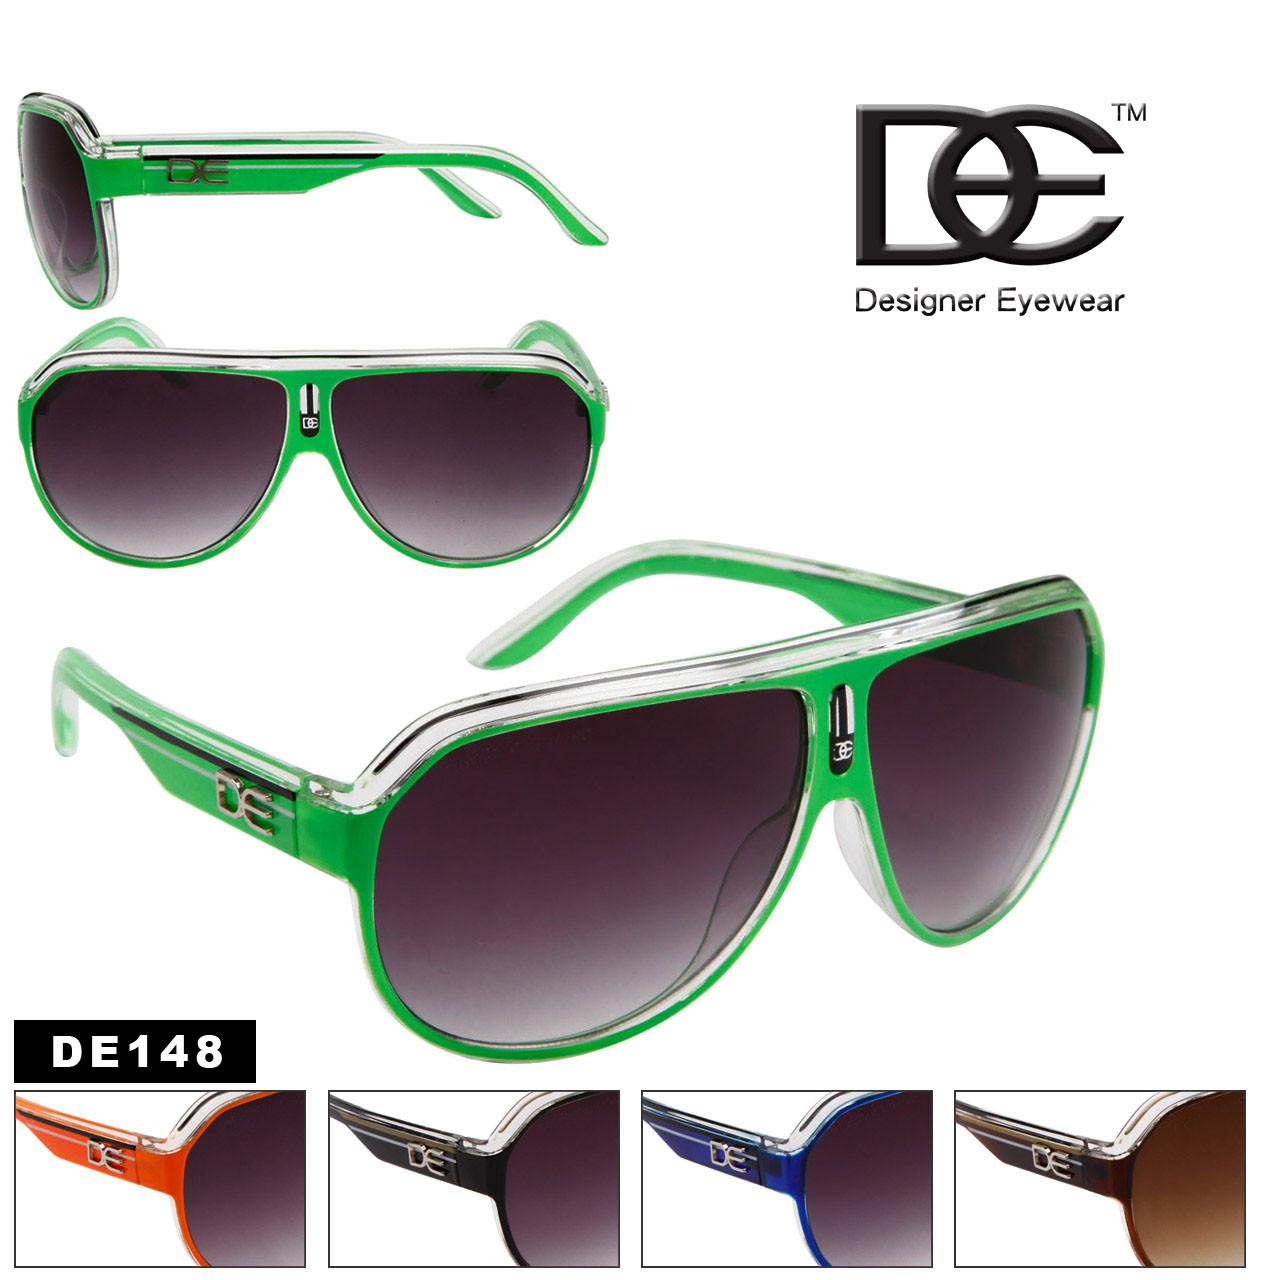 Designer Eyewear - Wholesale Sunglasses - Style # DE148